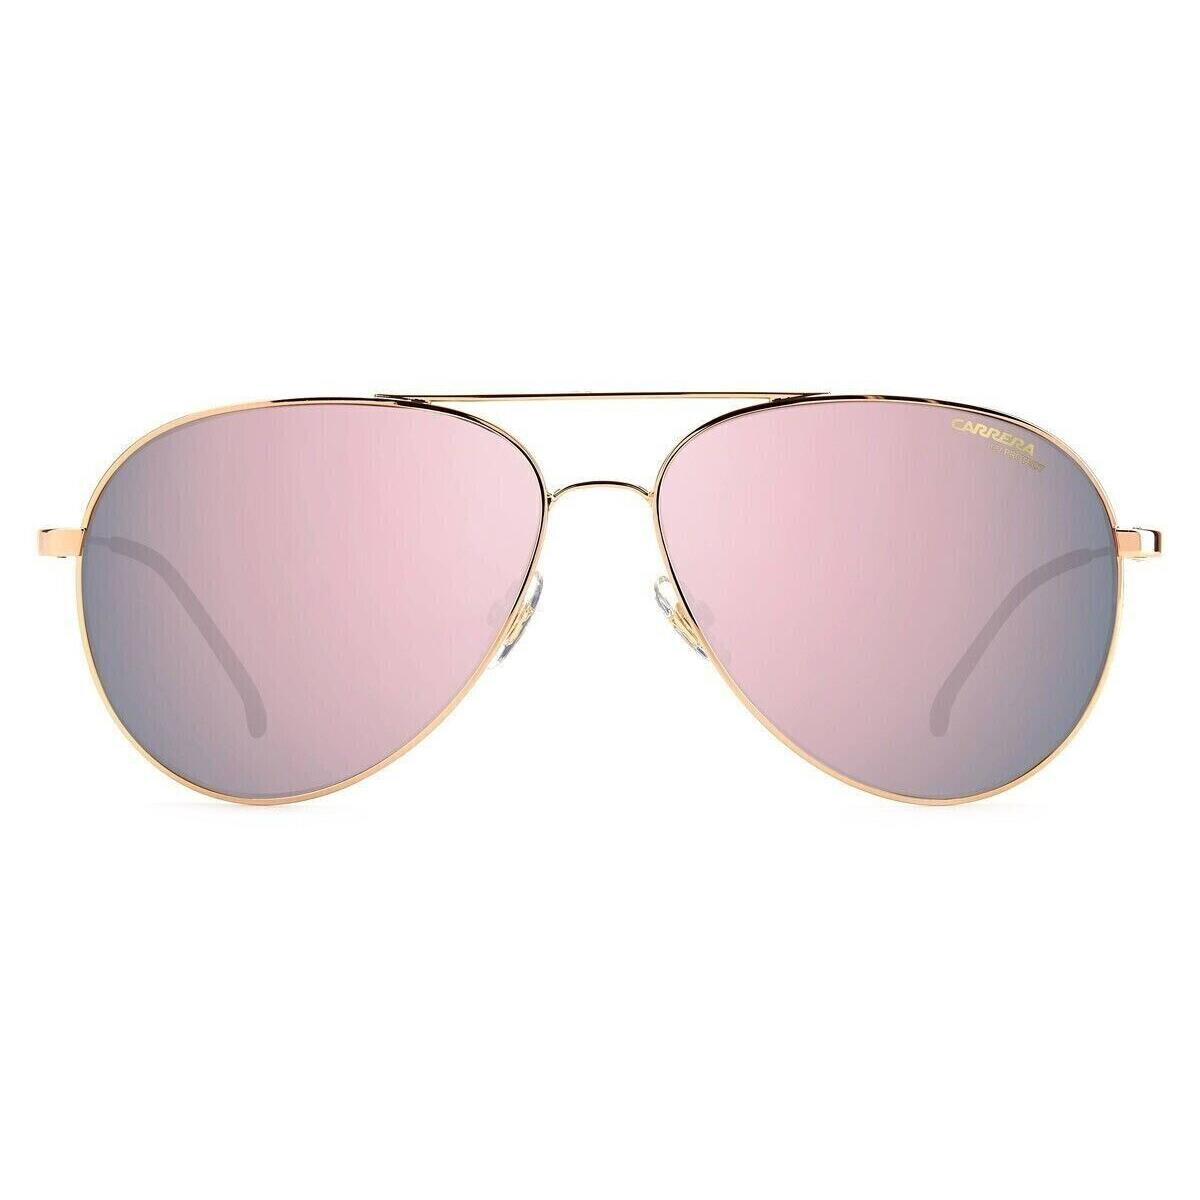 Carrera sunglasses  - Gold Copper Frame, Copper Lens